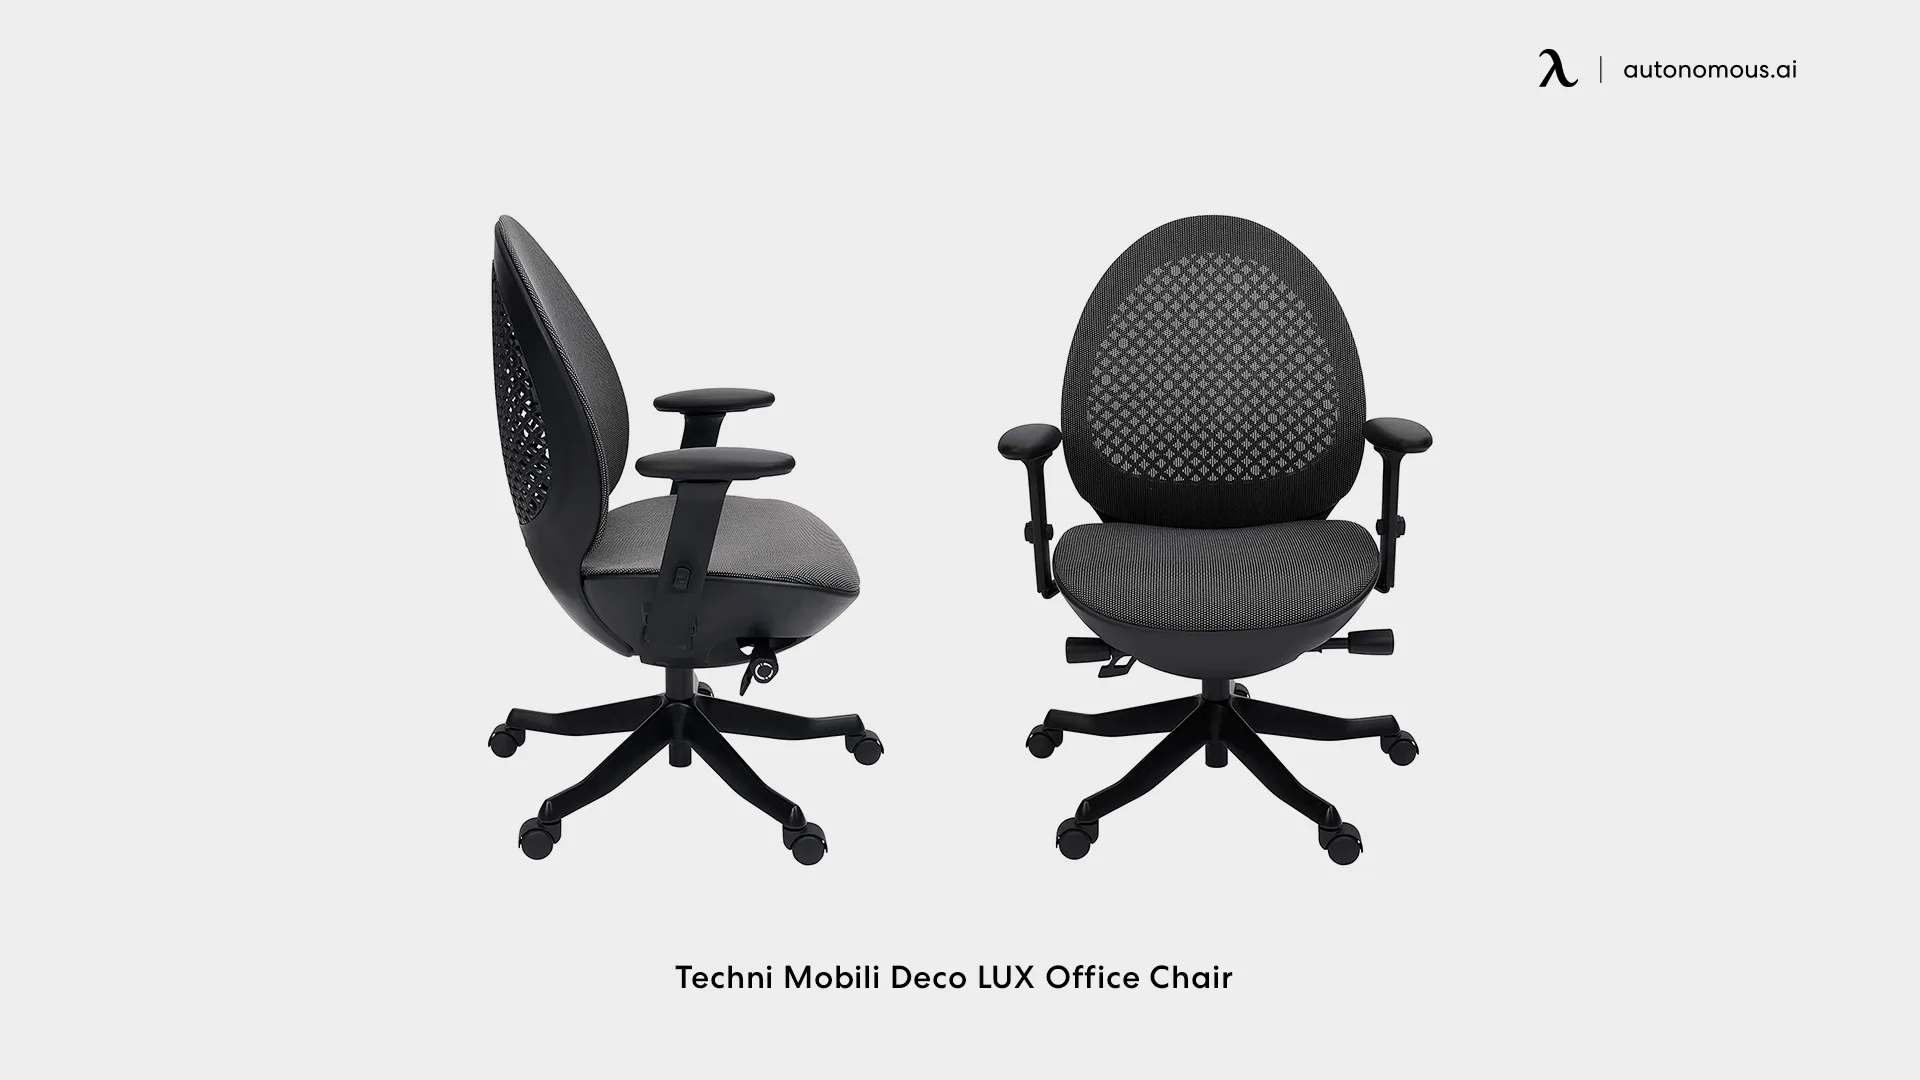 Techni Mobili Deco LUX Office Chair